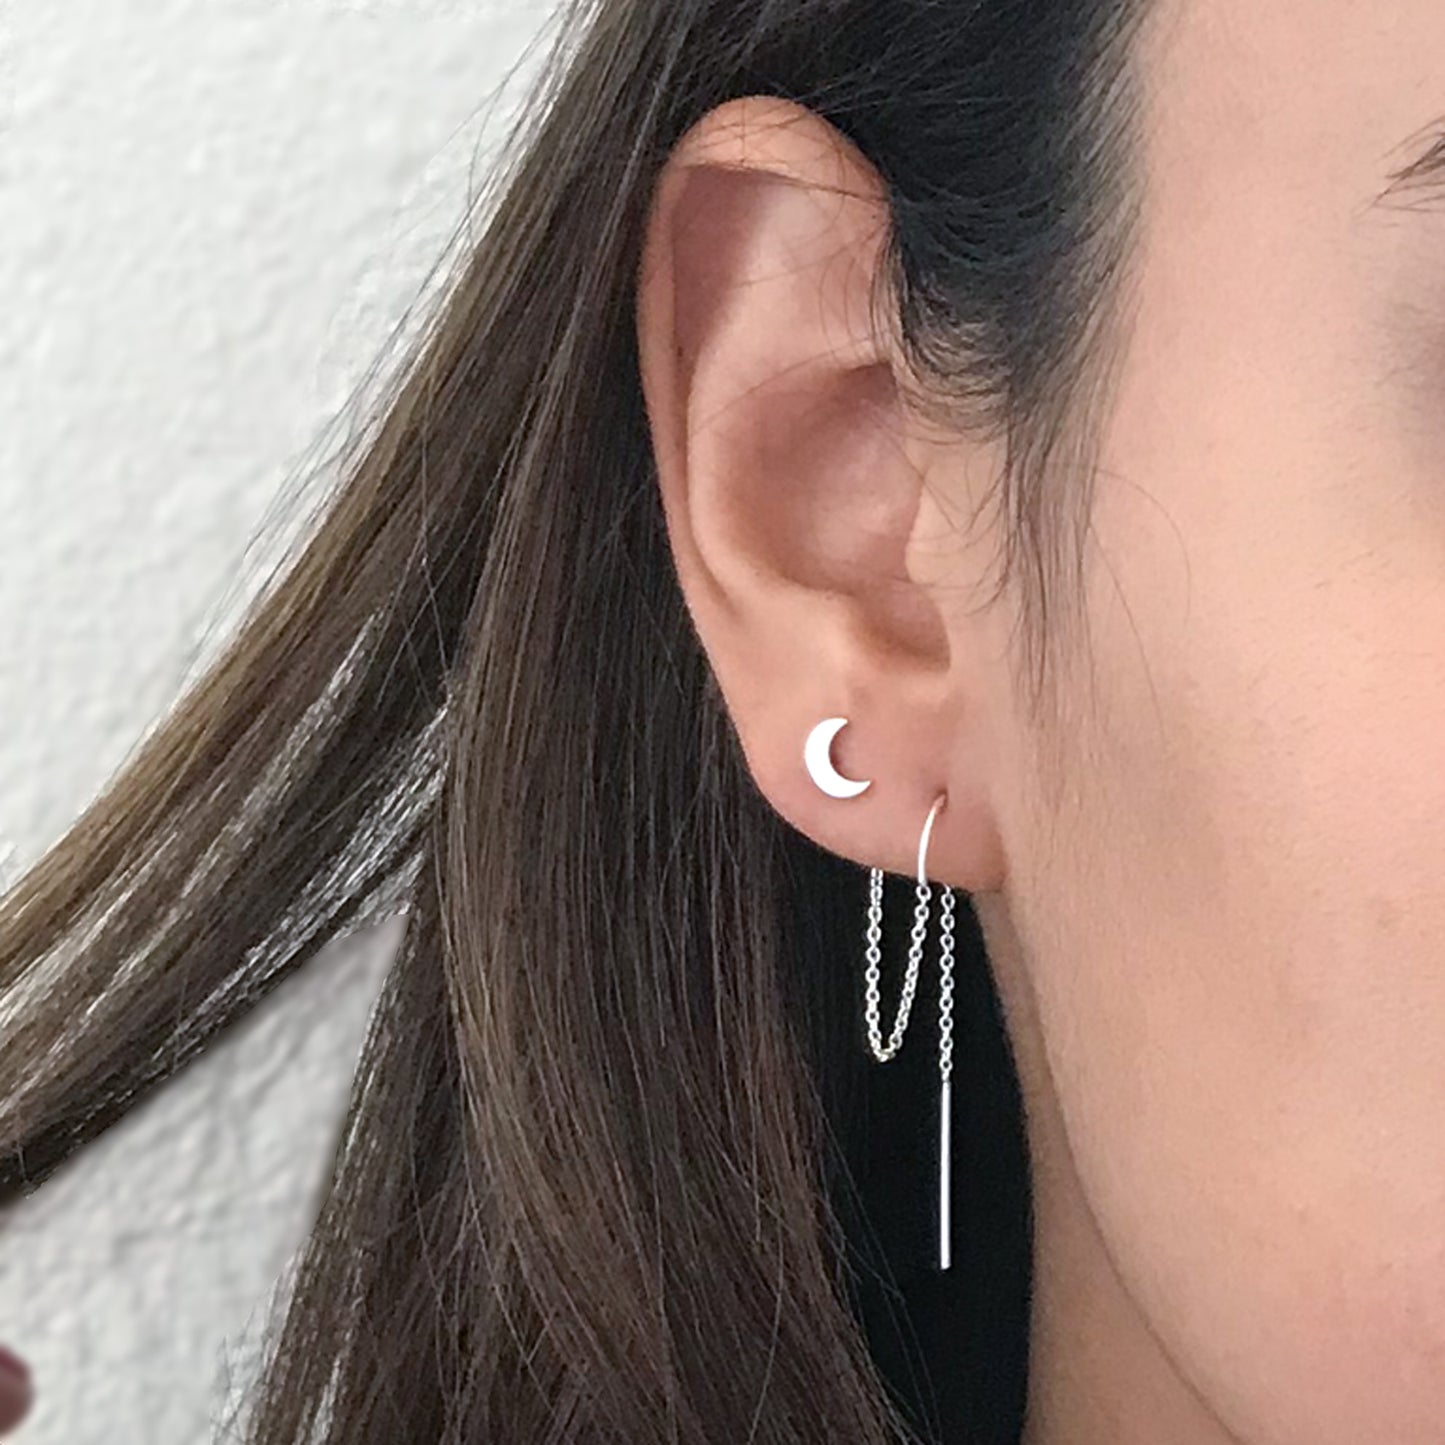 Dainty Gold Earring Set, Mix Match Gold Earring Set, Earring Sets Gold,  Chain Earrings Gold, Double Chain Earrings, Double Piercing Earring - Etsy  | Dainty gold earrings, Earring set, Ear jewelry